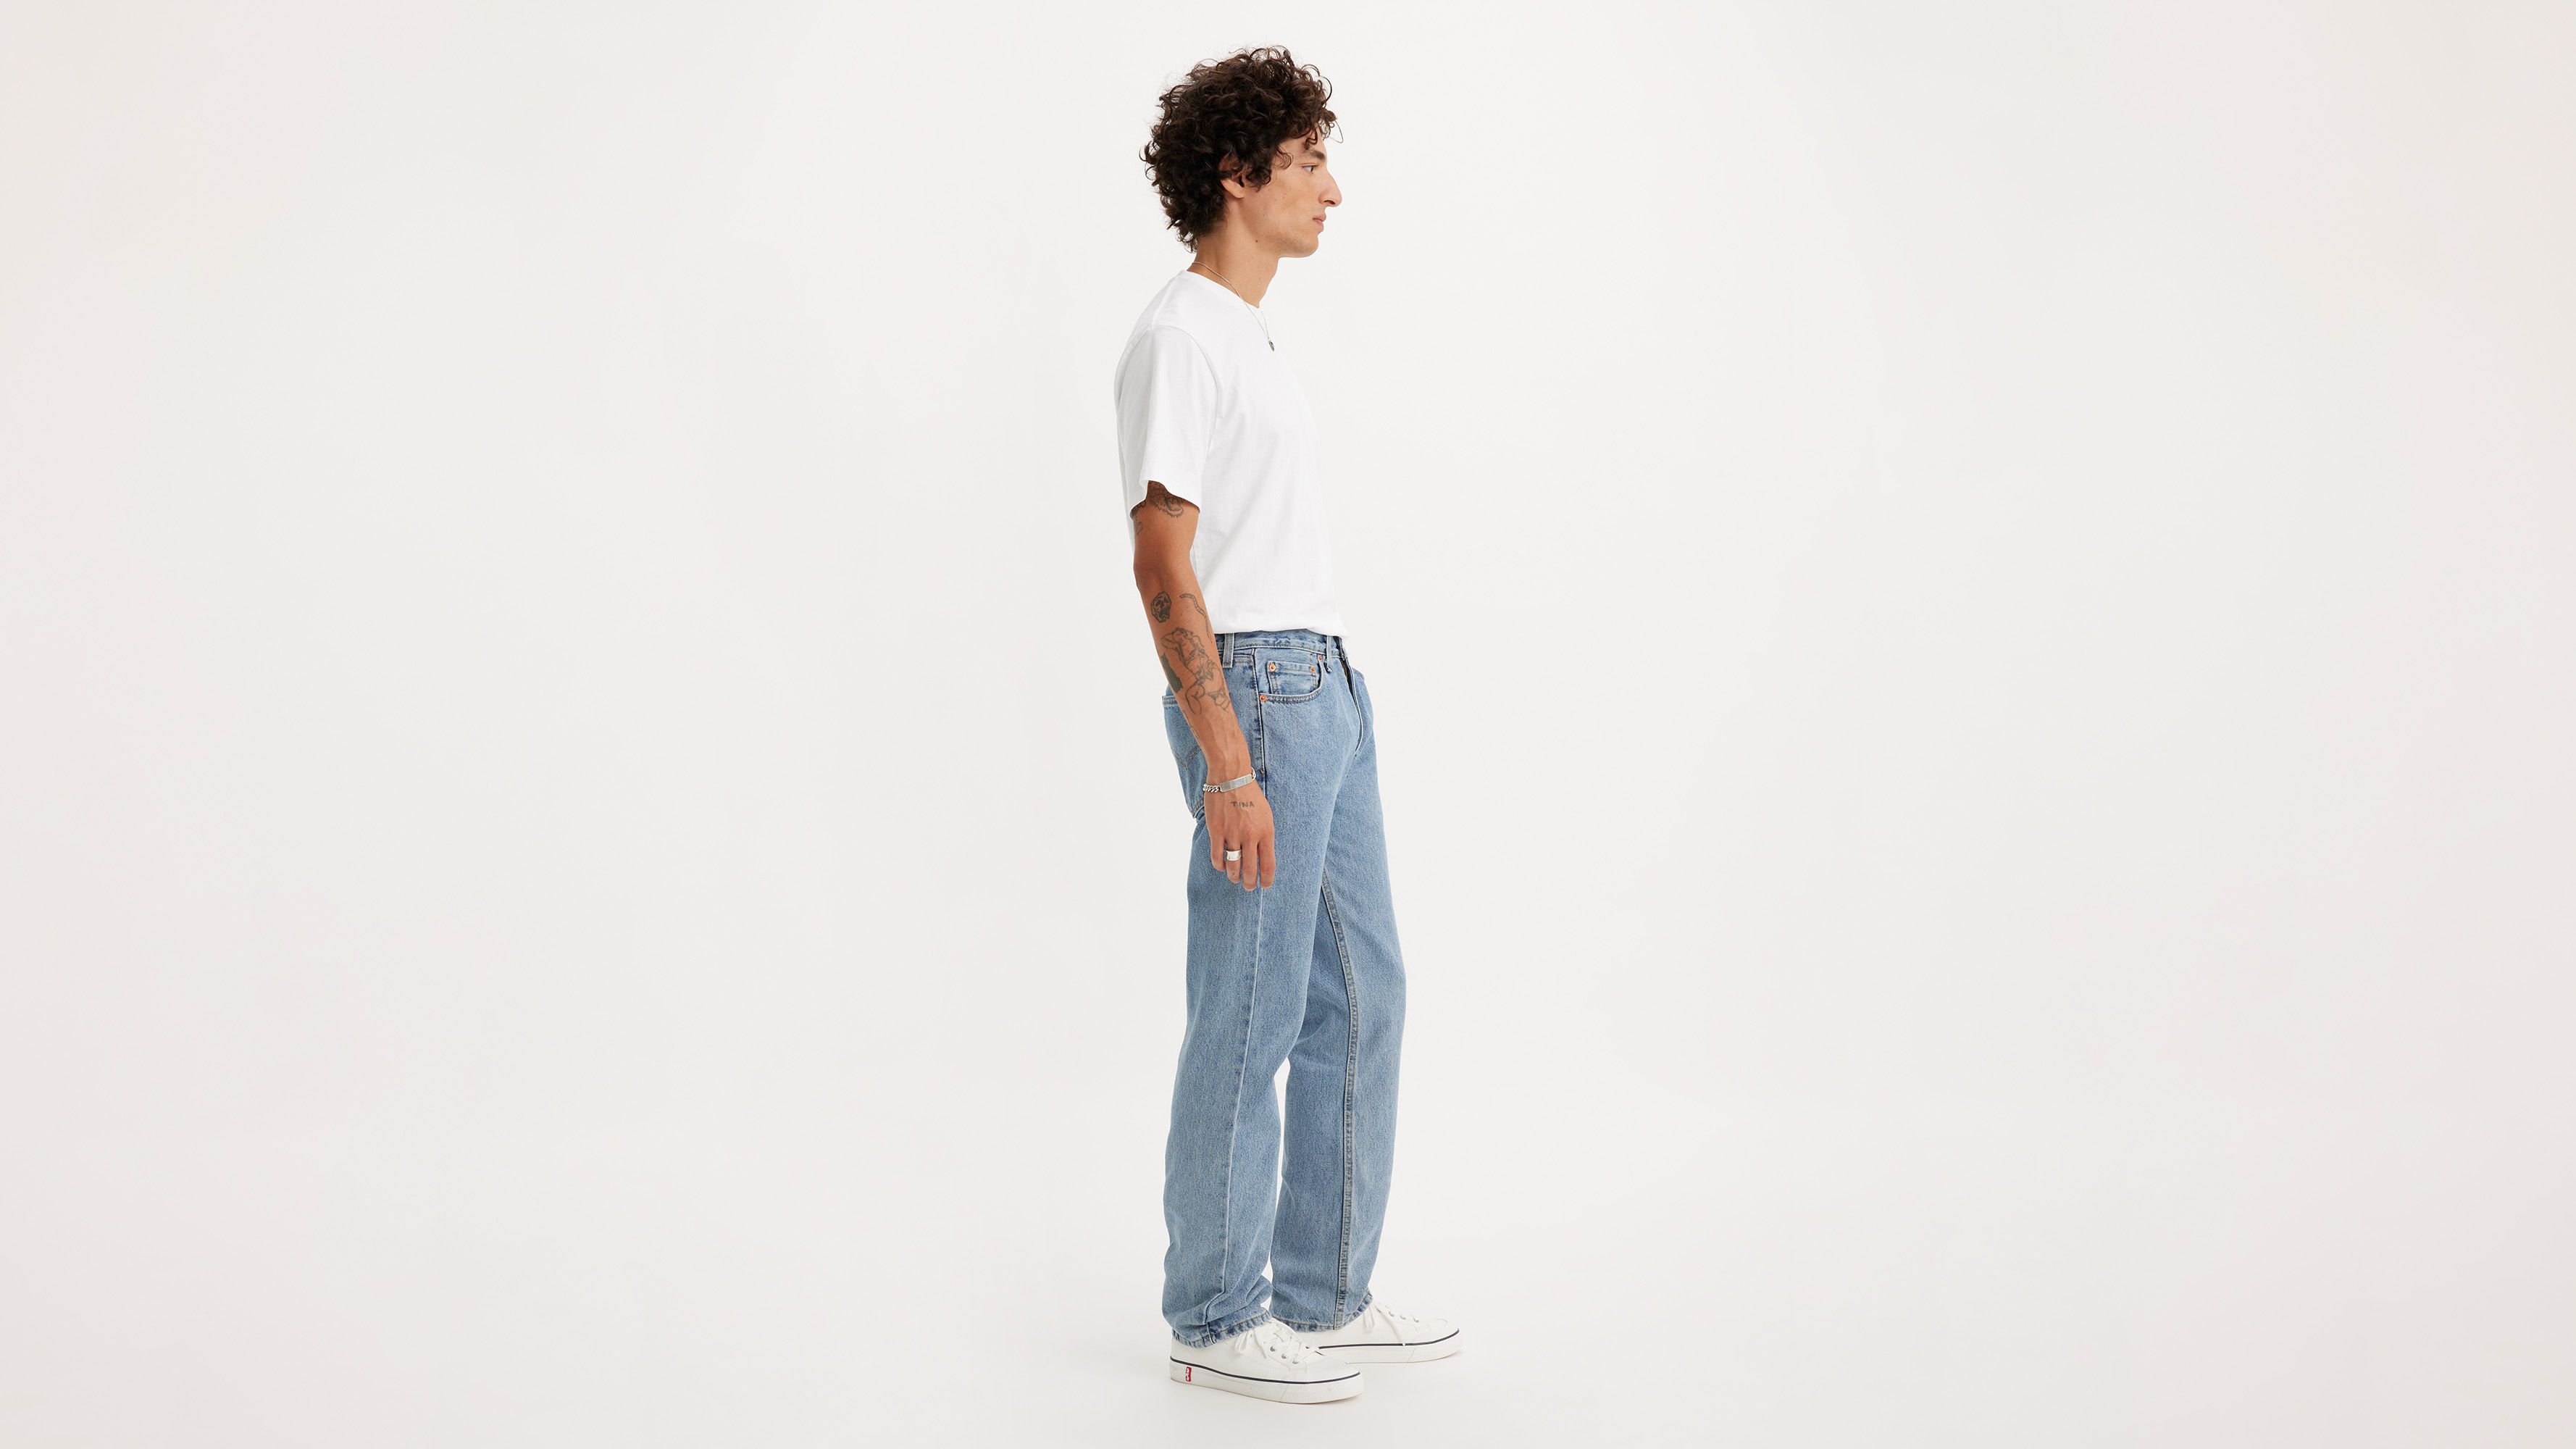 levi's 505 regular fit jeans